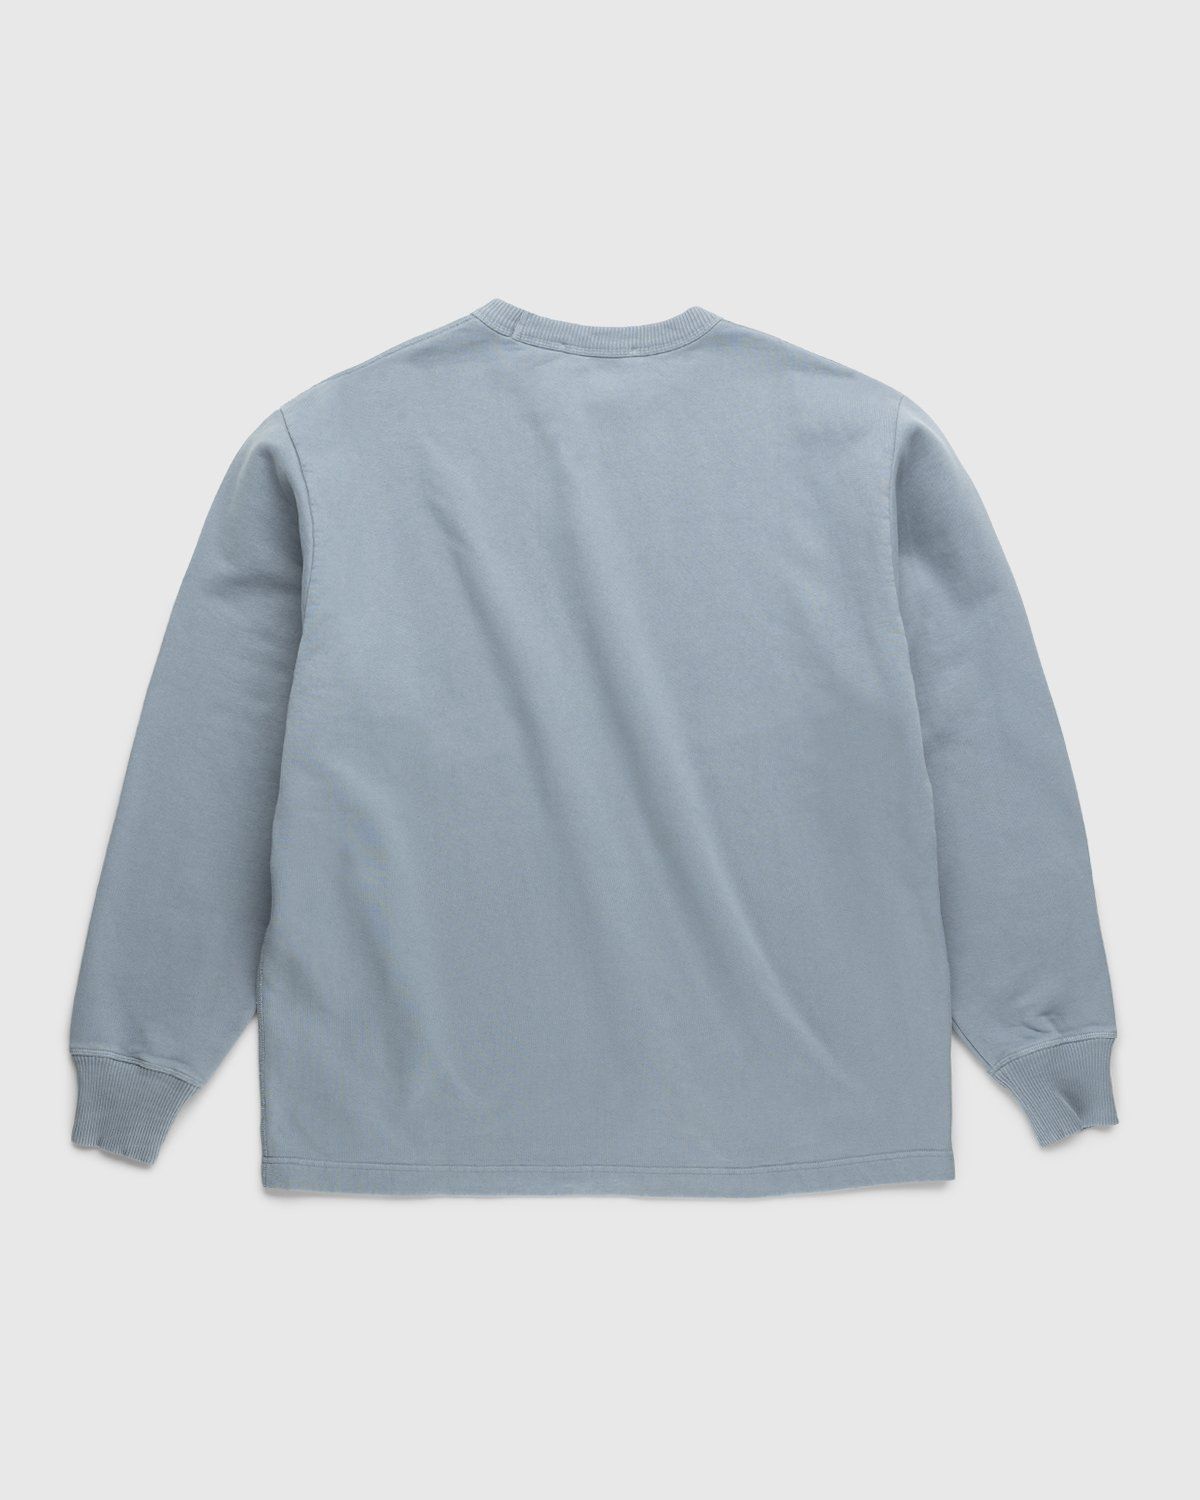 Acne Studios – Organic Cotton Crewneck Sweatshirt Steel Grey - Sweatshirts - Grey - Image 2